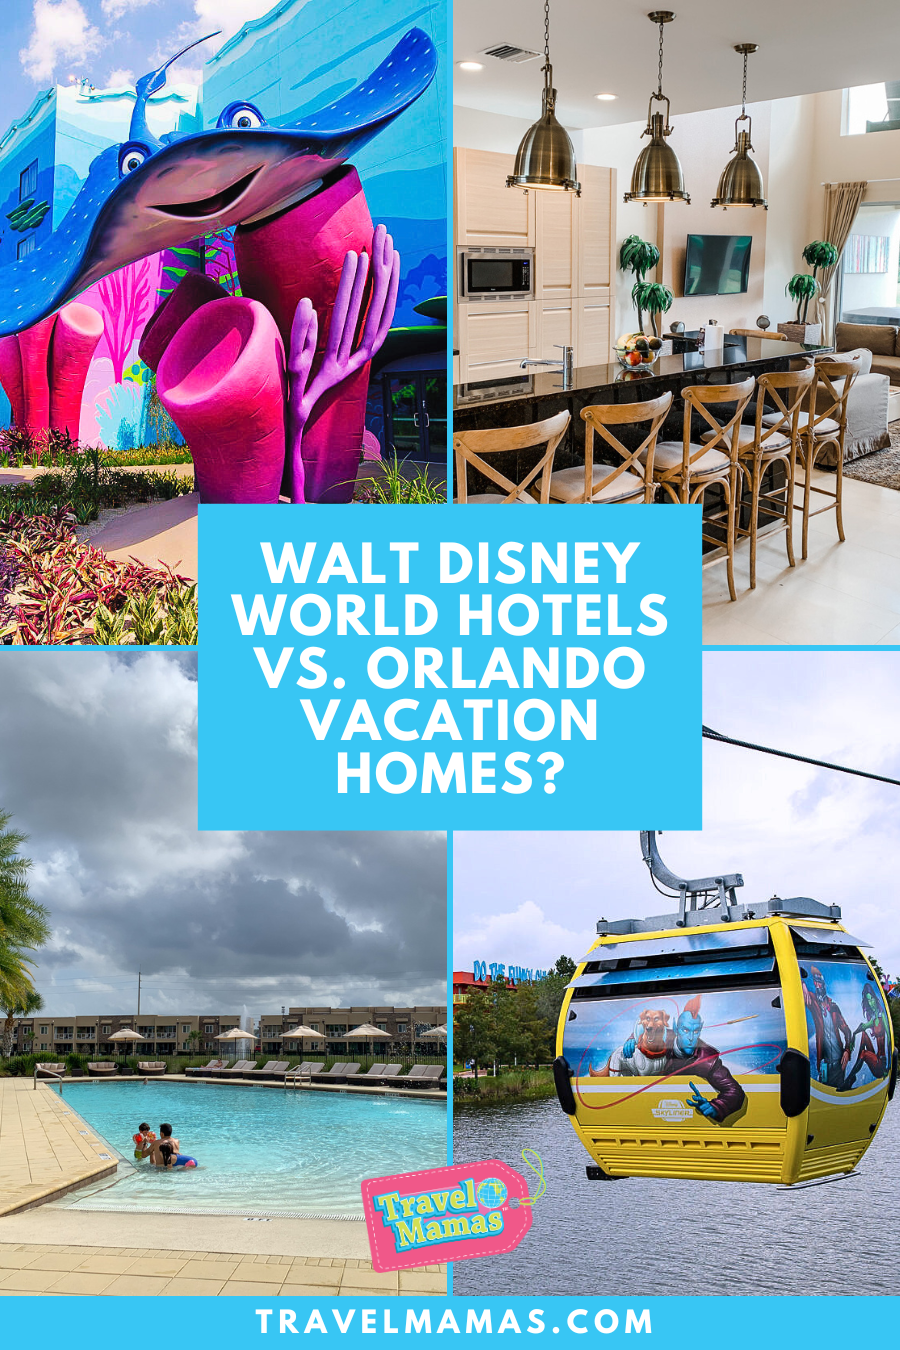 Walt Disney World Hotels vs. Orlando Vacation Homes?